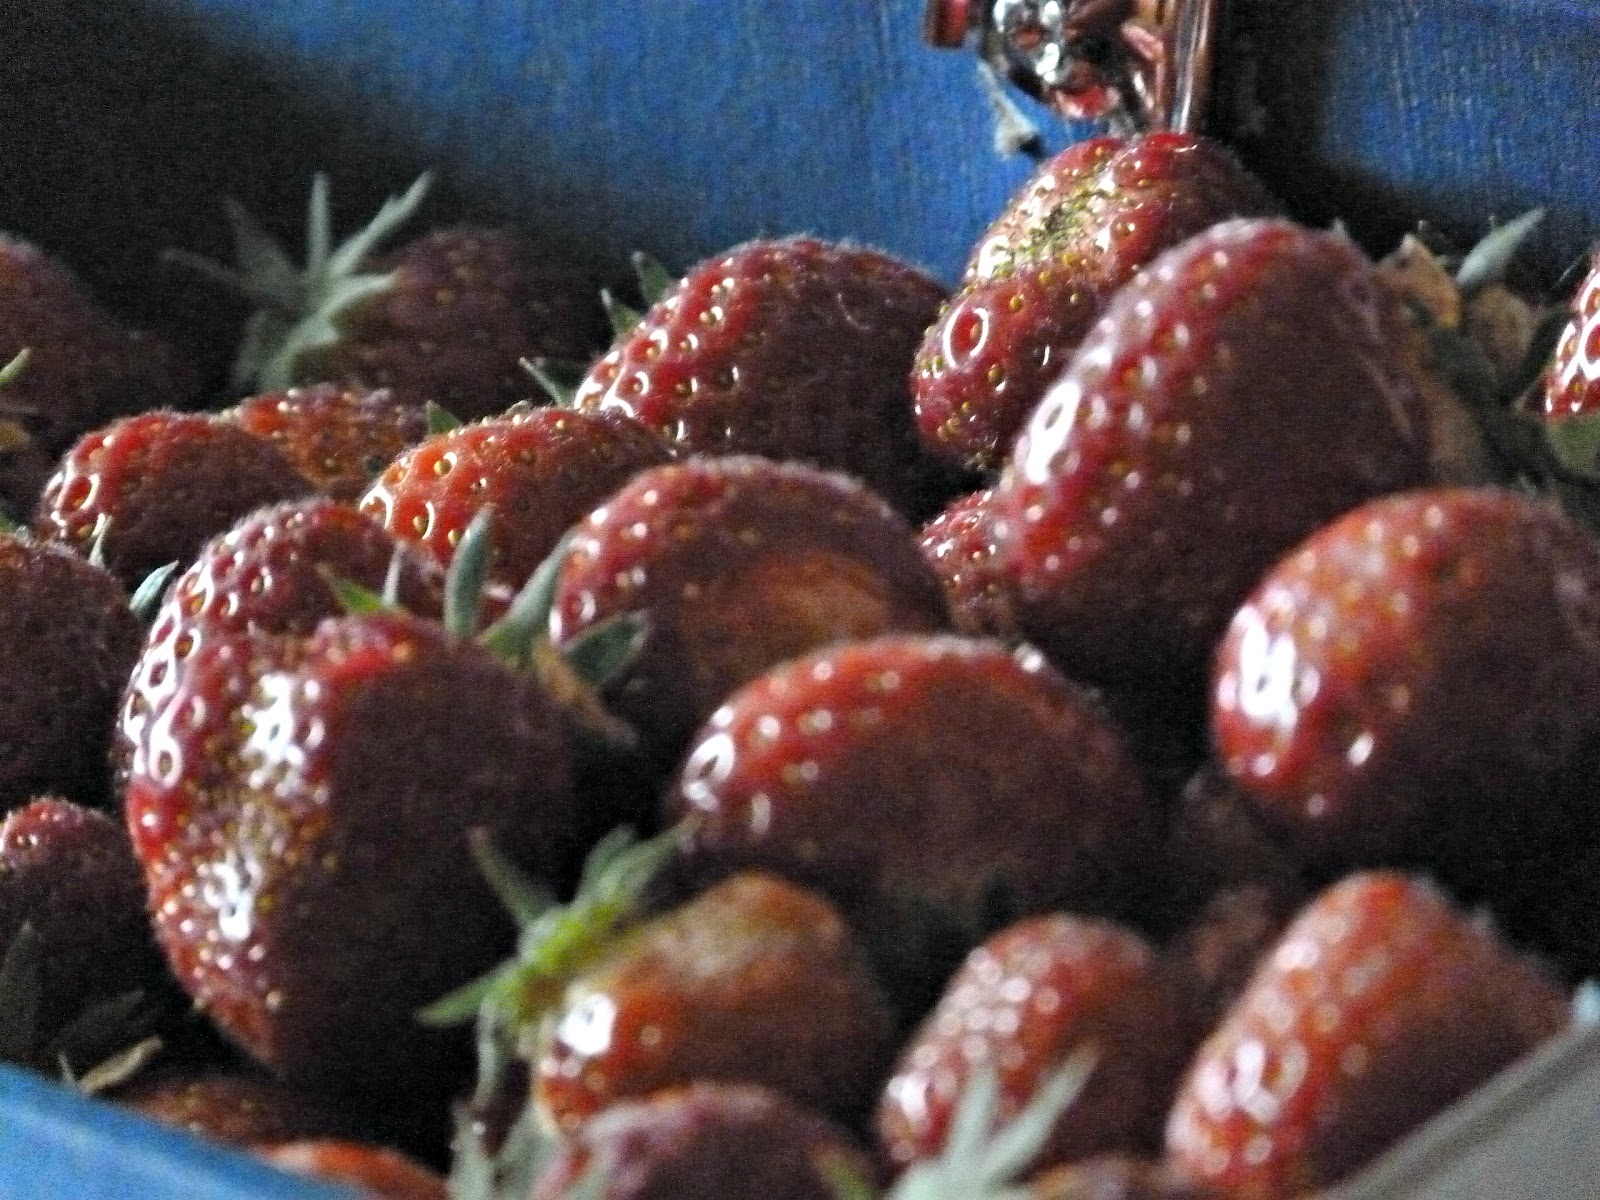 Strawberries - Scottish, tasty and healthy.